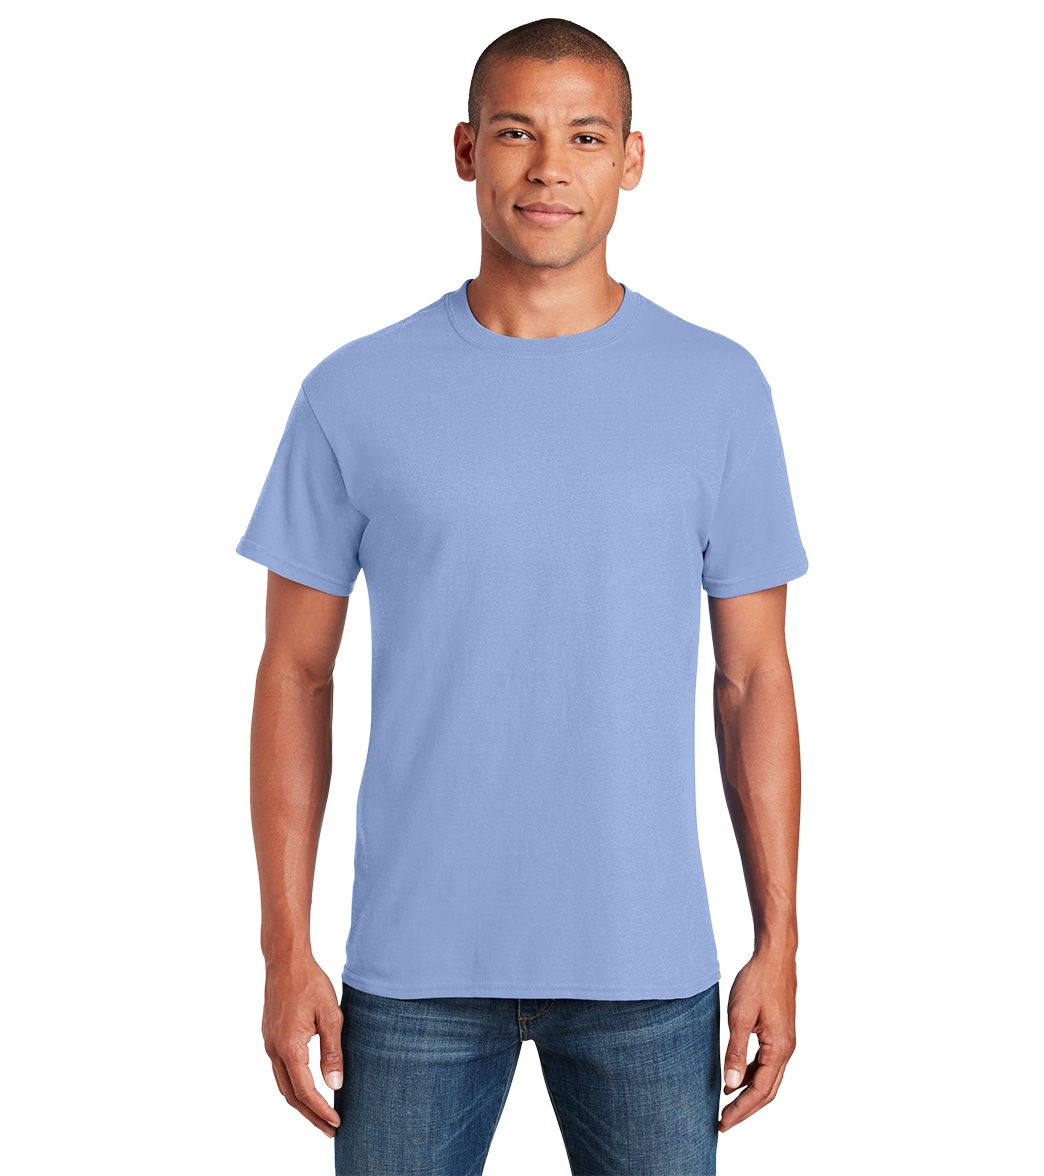 Men's Cotton Crew Neck T-Shirt - Carolina Blue Medium - Swimoutlet.com